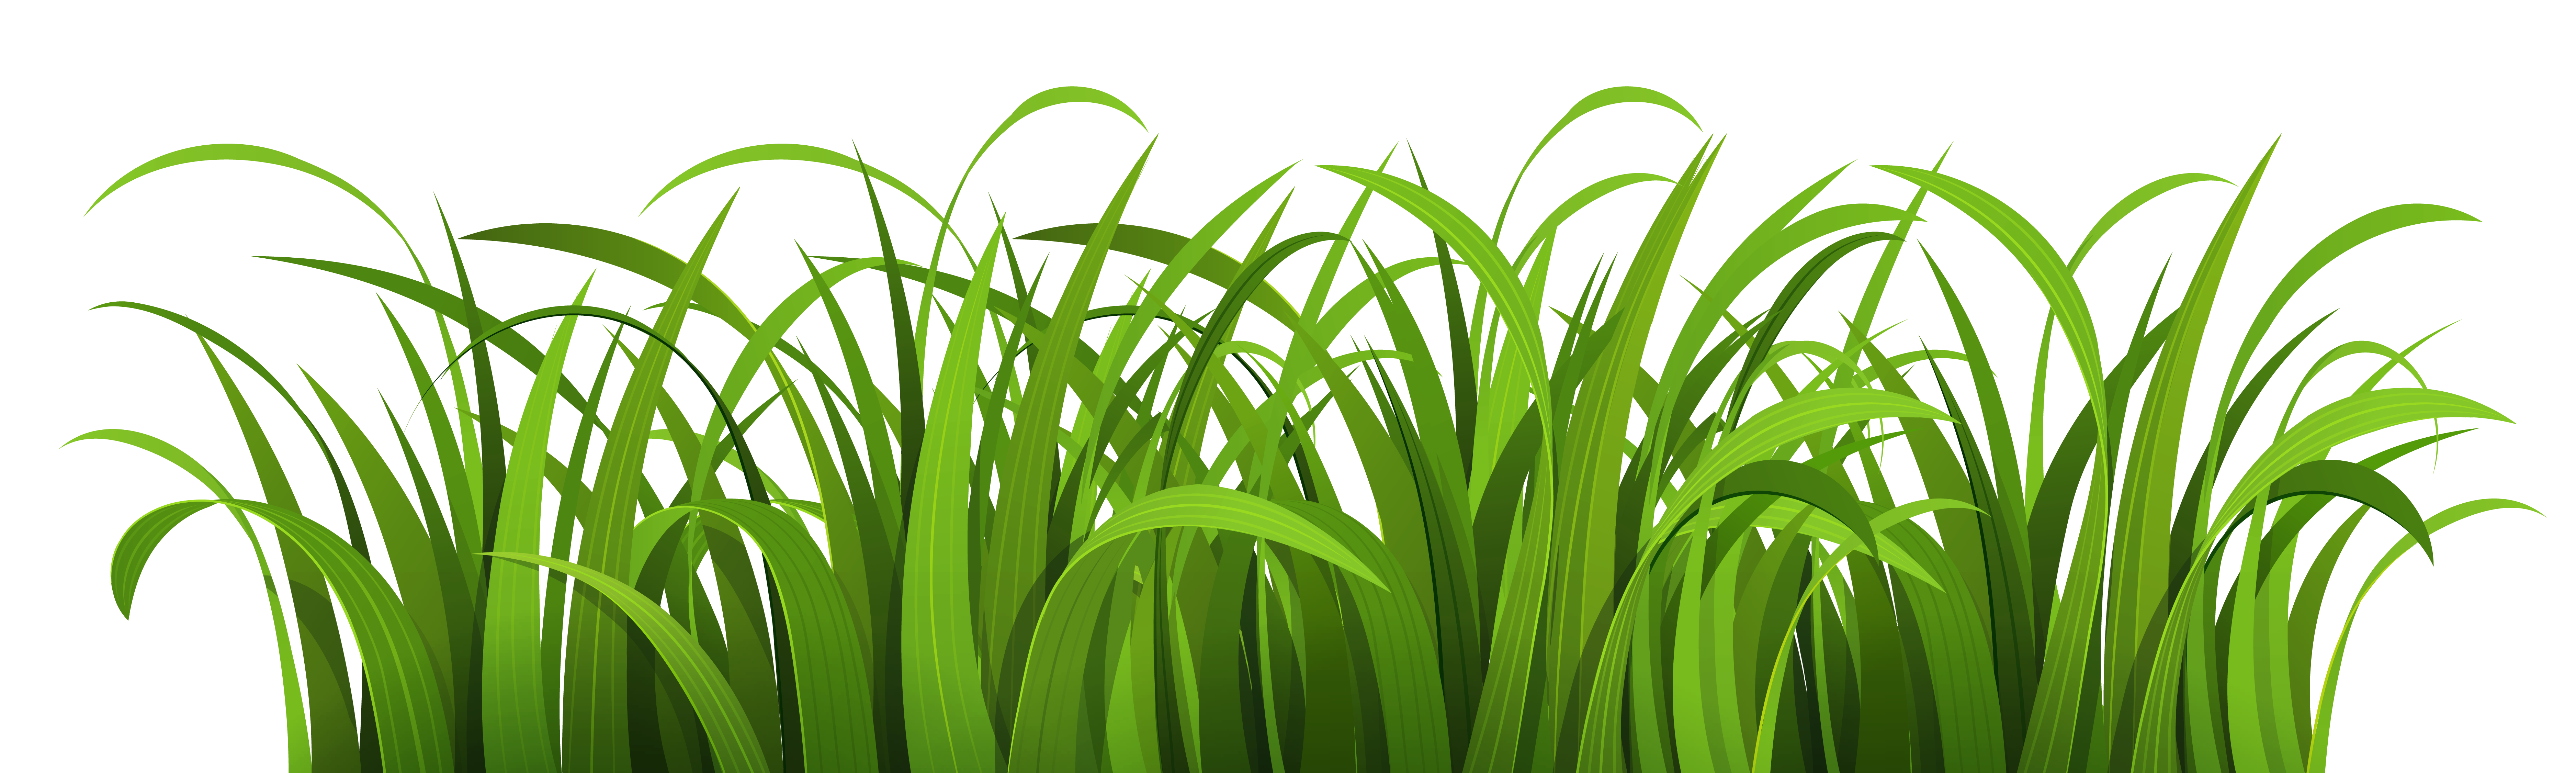 Grass clipart vector, Grass vector Transparent FREE for